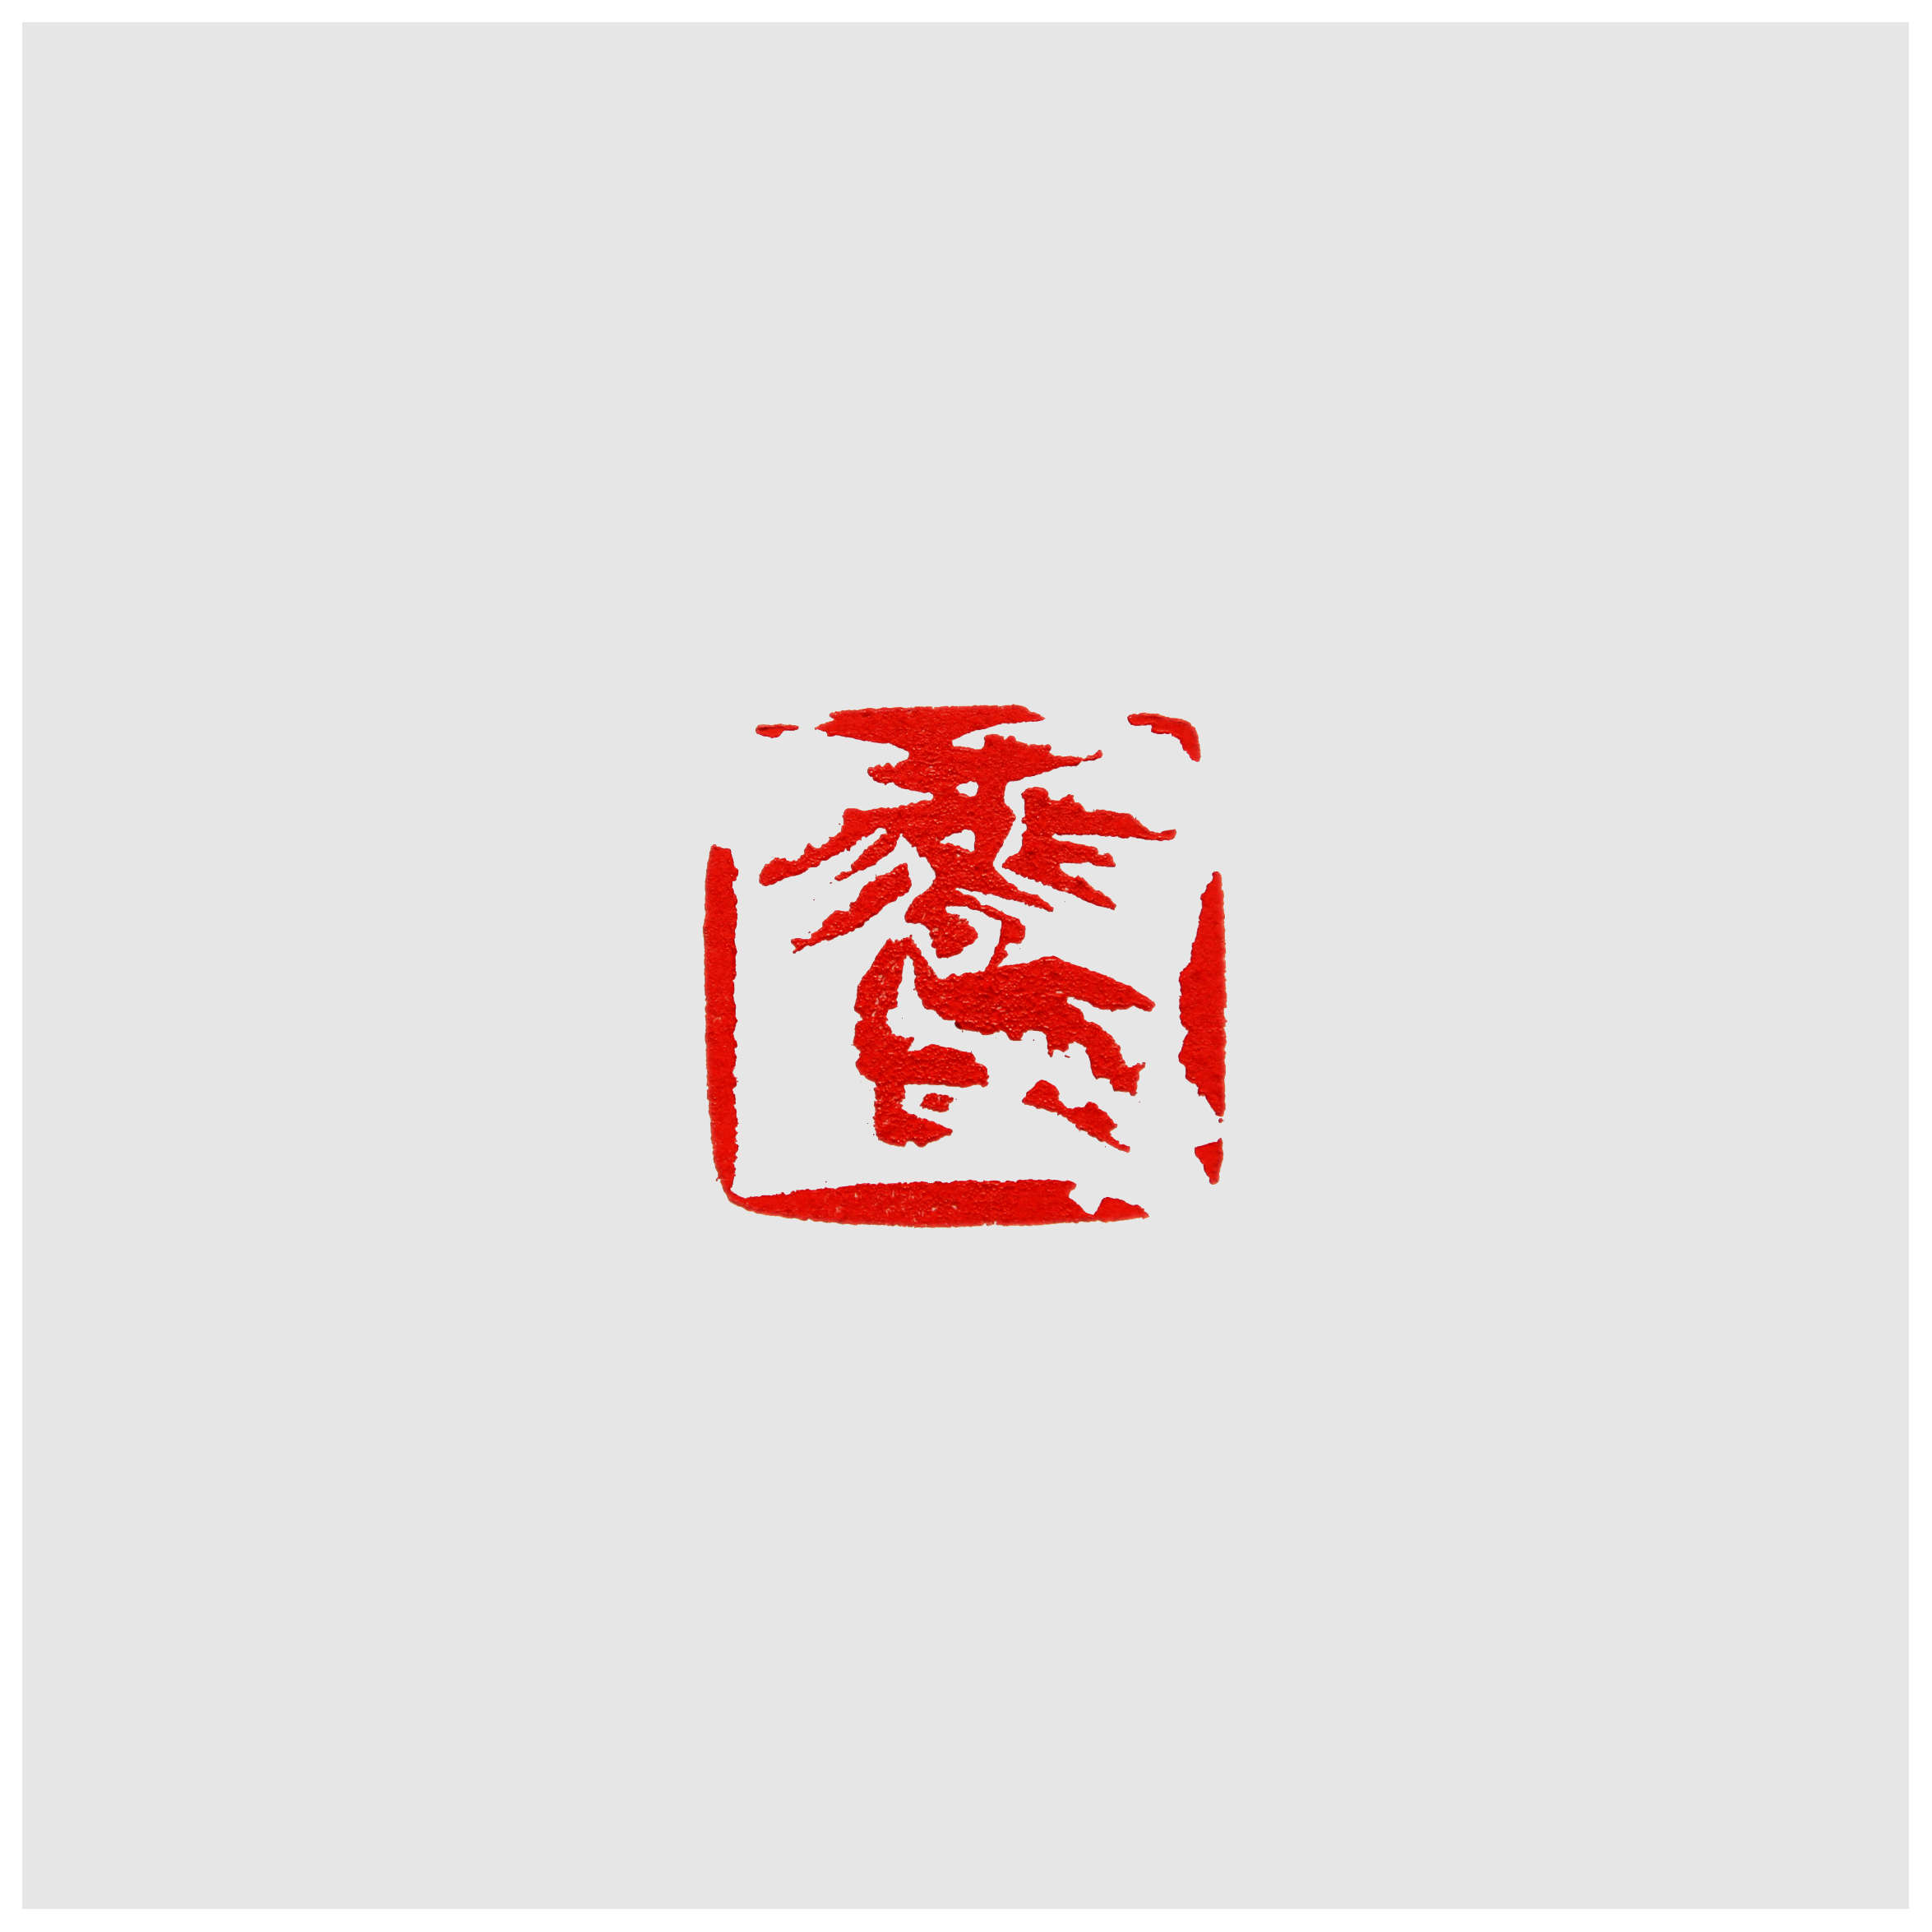 Qi Hong (Sai Koh) 's freehand brushwork style semi-seal script artistic name seal carving (aka Chinese seal engraving, seal cutting) imprint: Barn Swallow, 30×30mm, stone